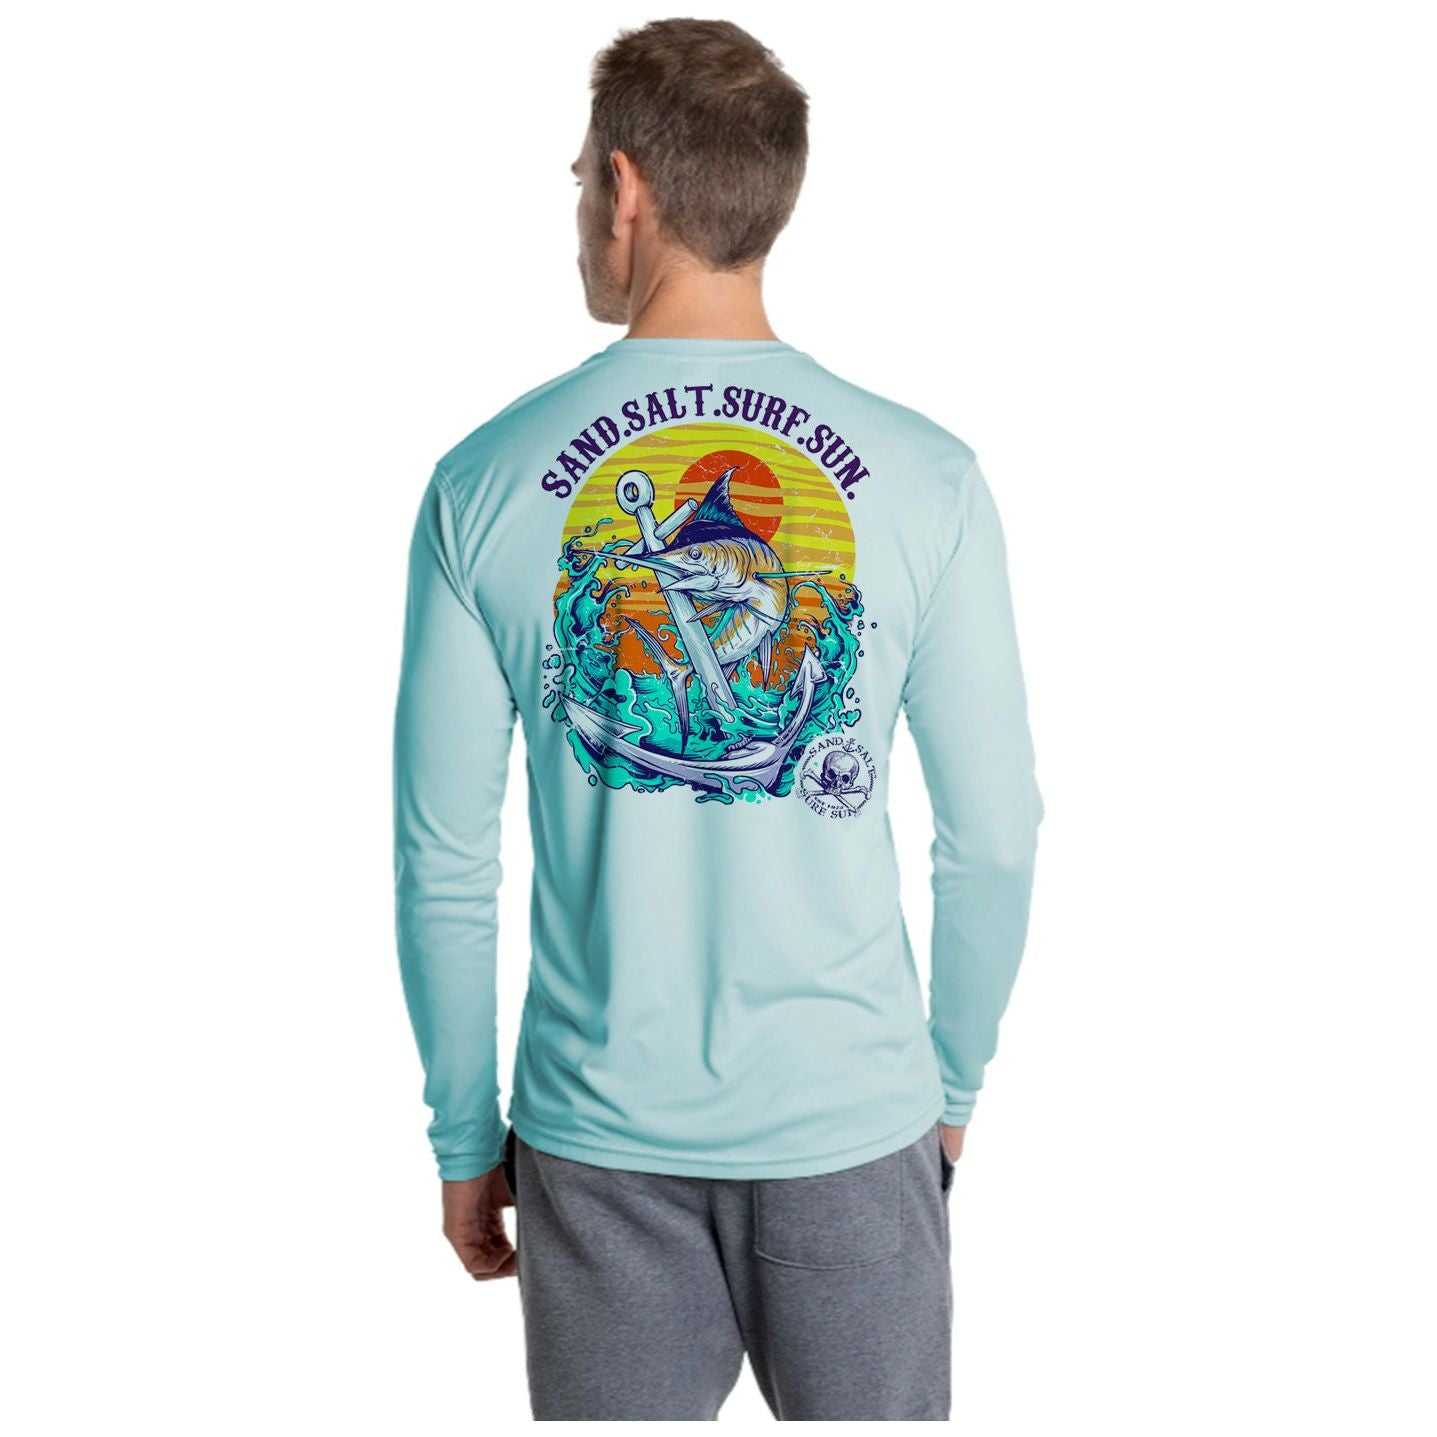 SAND.SALT.SURF.SUN. Marlin Men's Anchor UPF 50+ UV Sun Protection Performance Long Sleeve T-Shirt X-Large / Arctic Blue